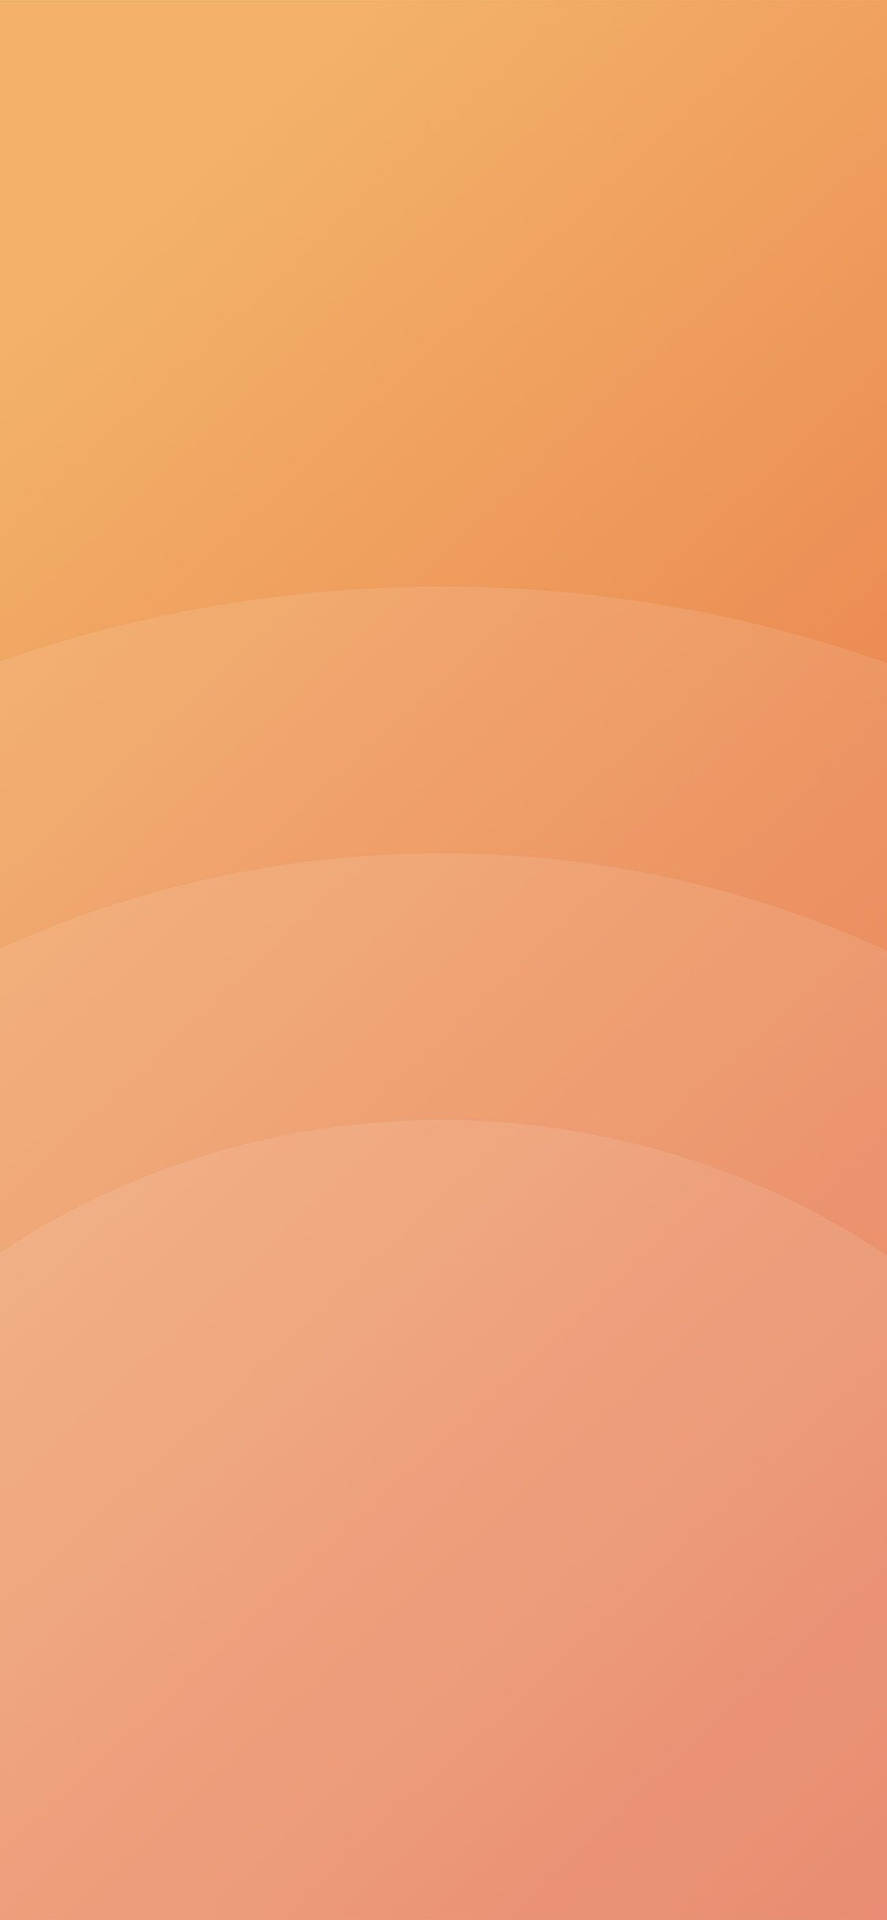 Pale Orange Circle Curves Background